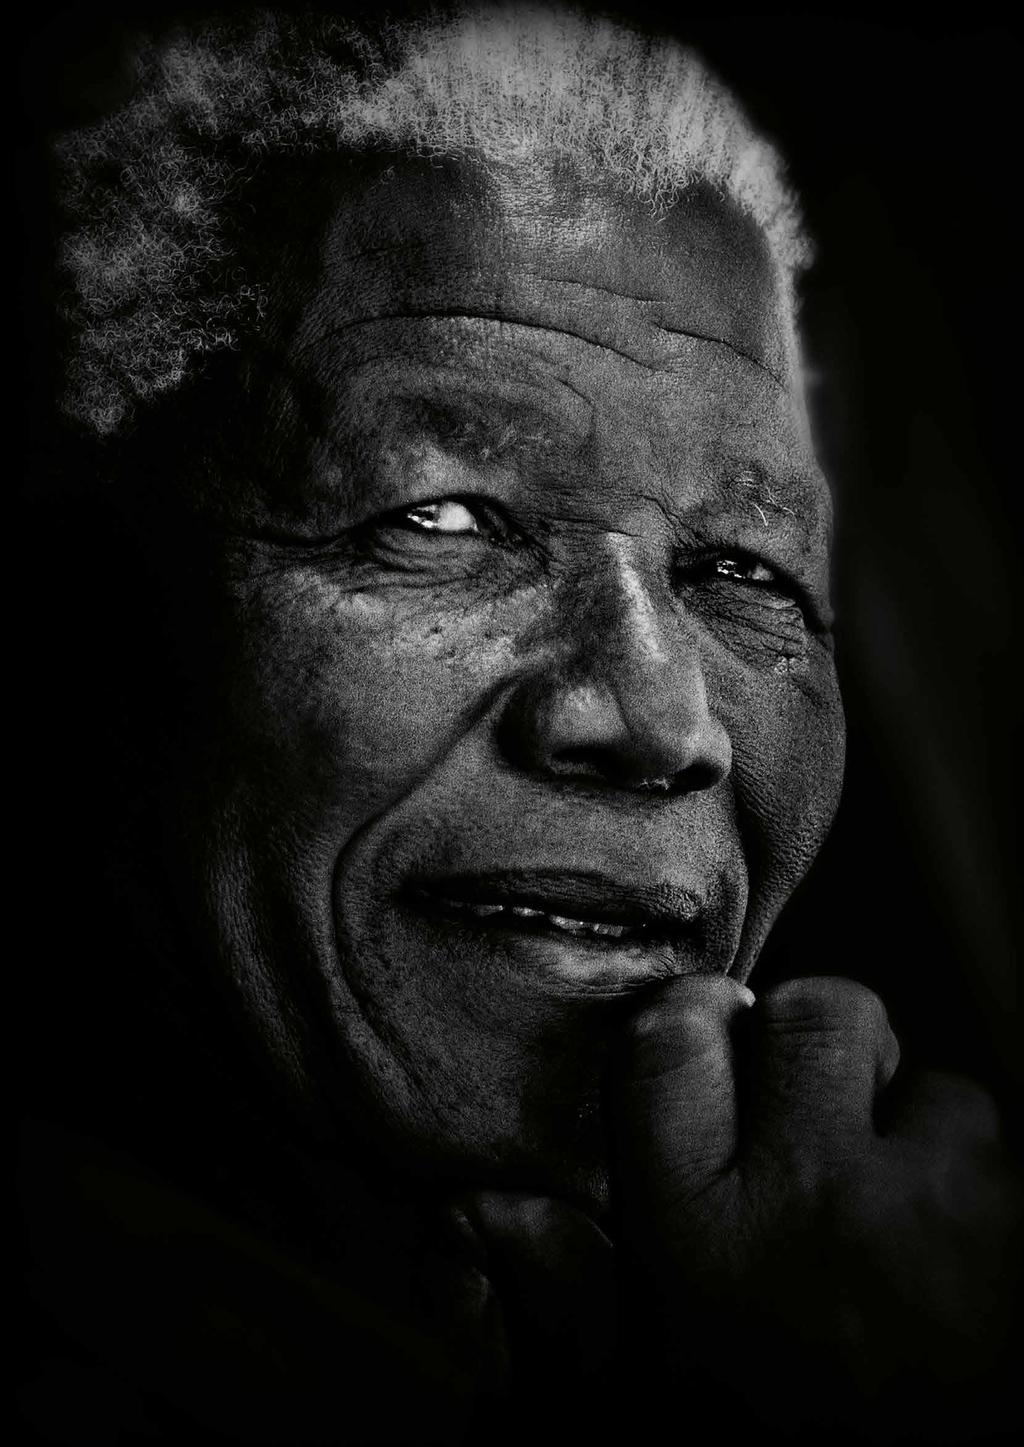 Nelson Mandela Concept & design: GianAngelo Pistoia Photos: LaPresse - UN Photo (John Isaac - Pernaca Sudhakaran - Eskinder Debebe - D.B.